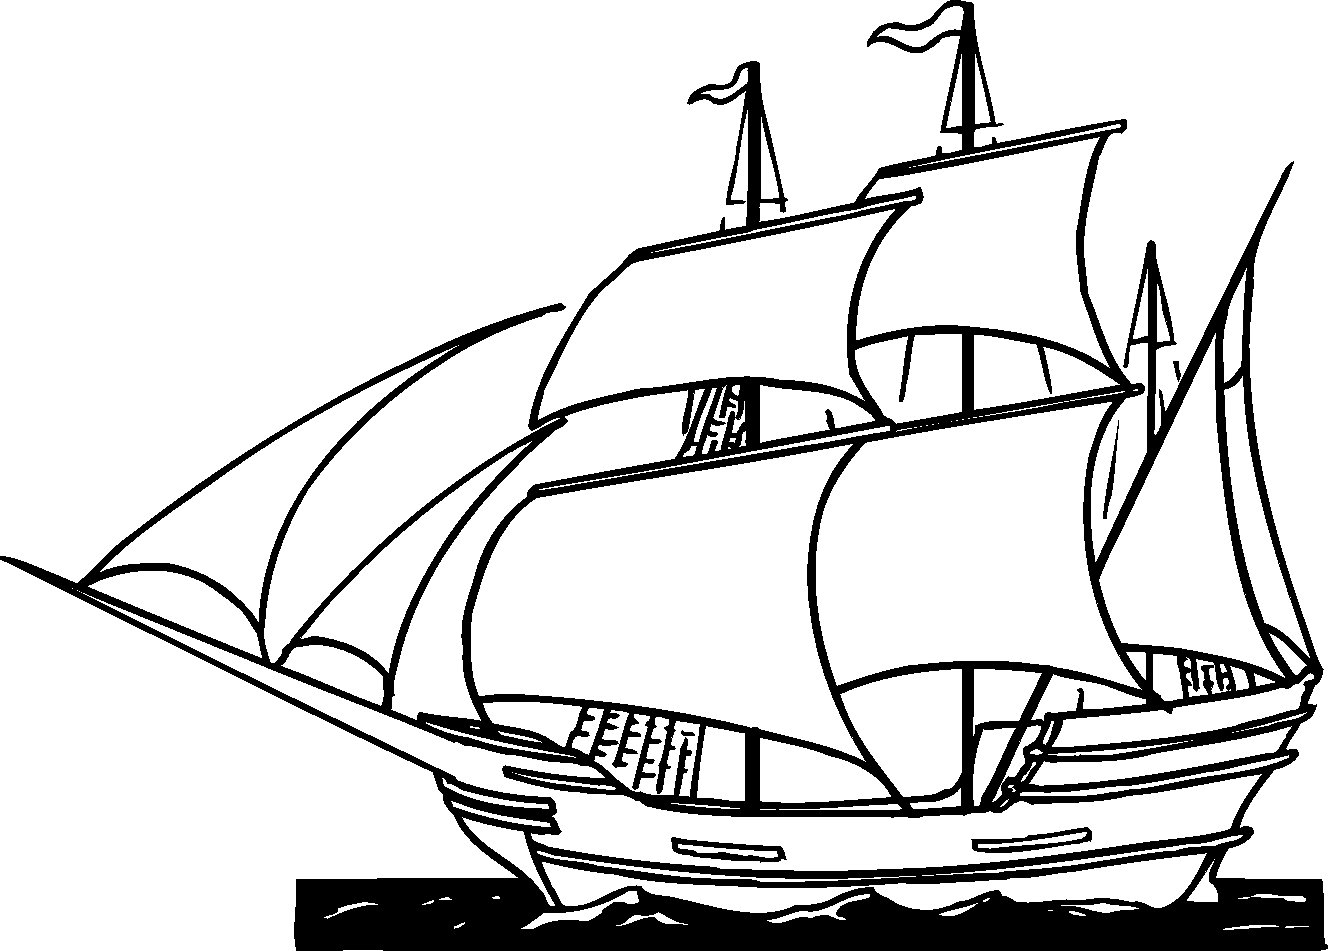 cardboard-pirate-ship-template